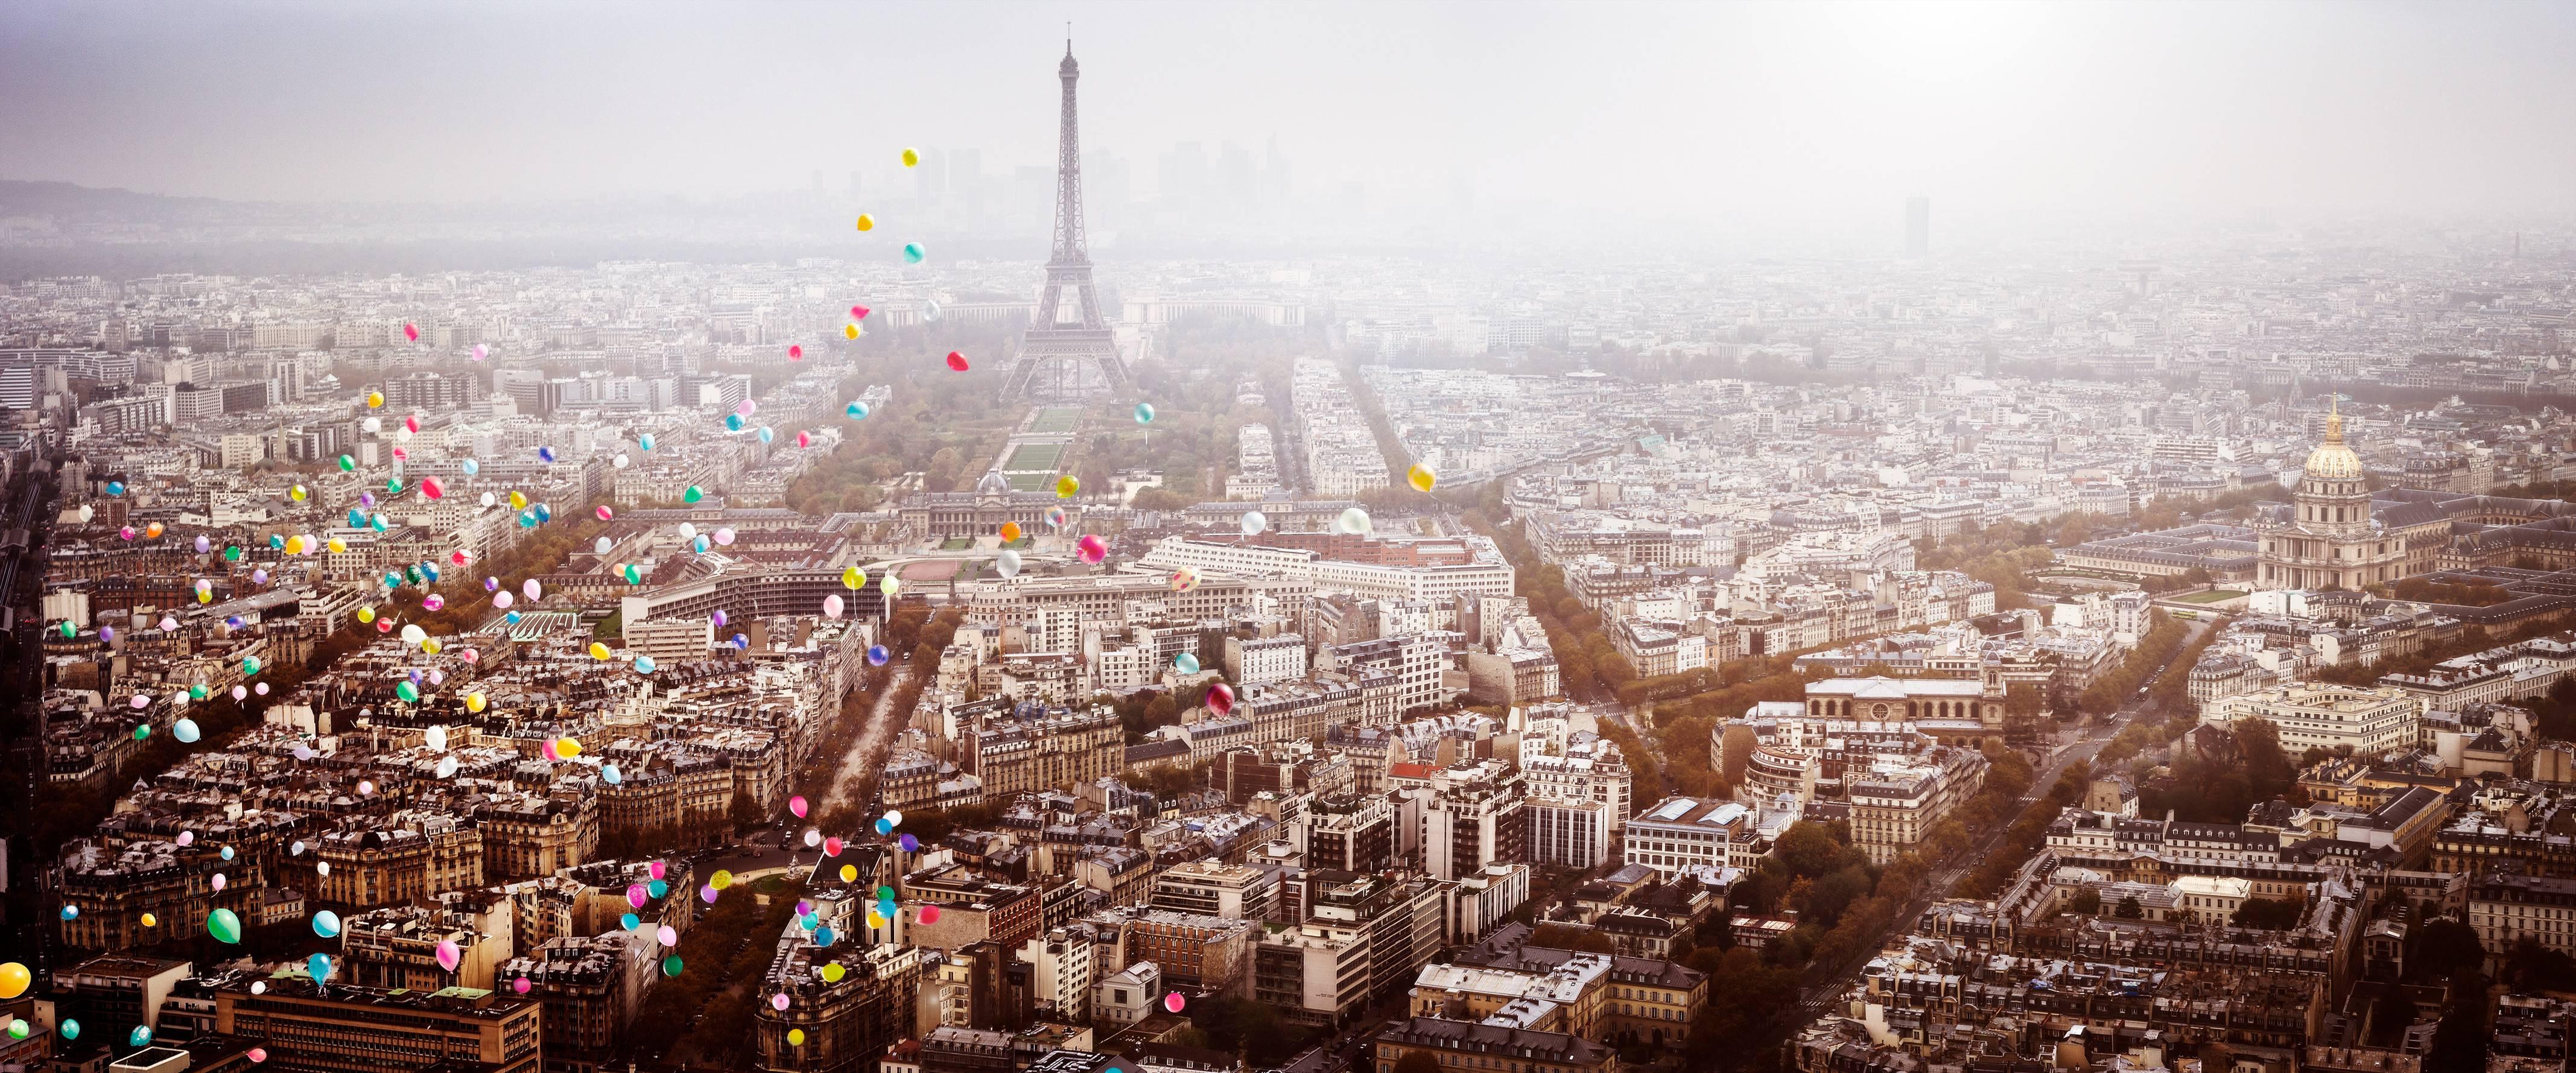 David Drebin Landscape Photograph - Balloons over Paris